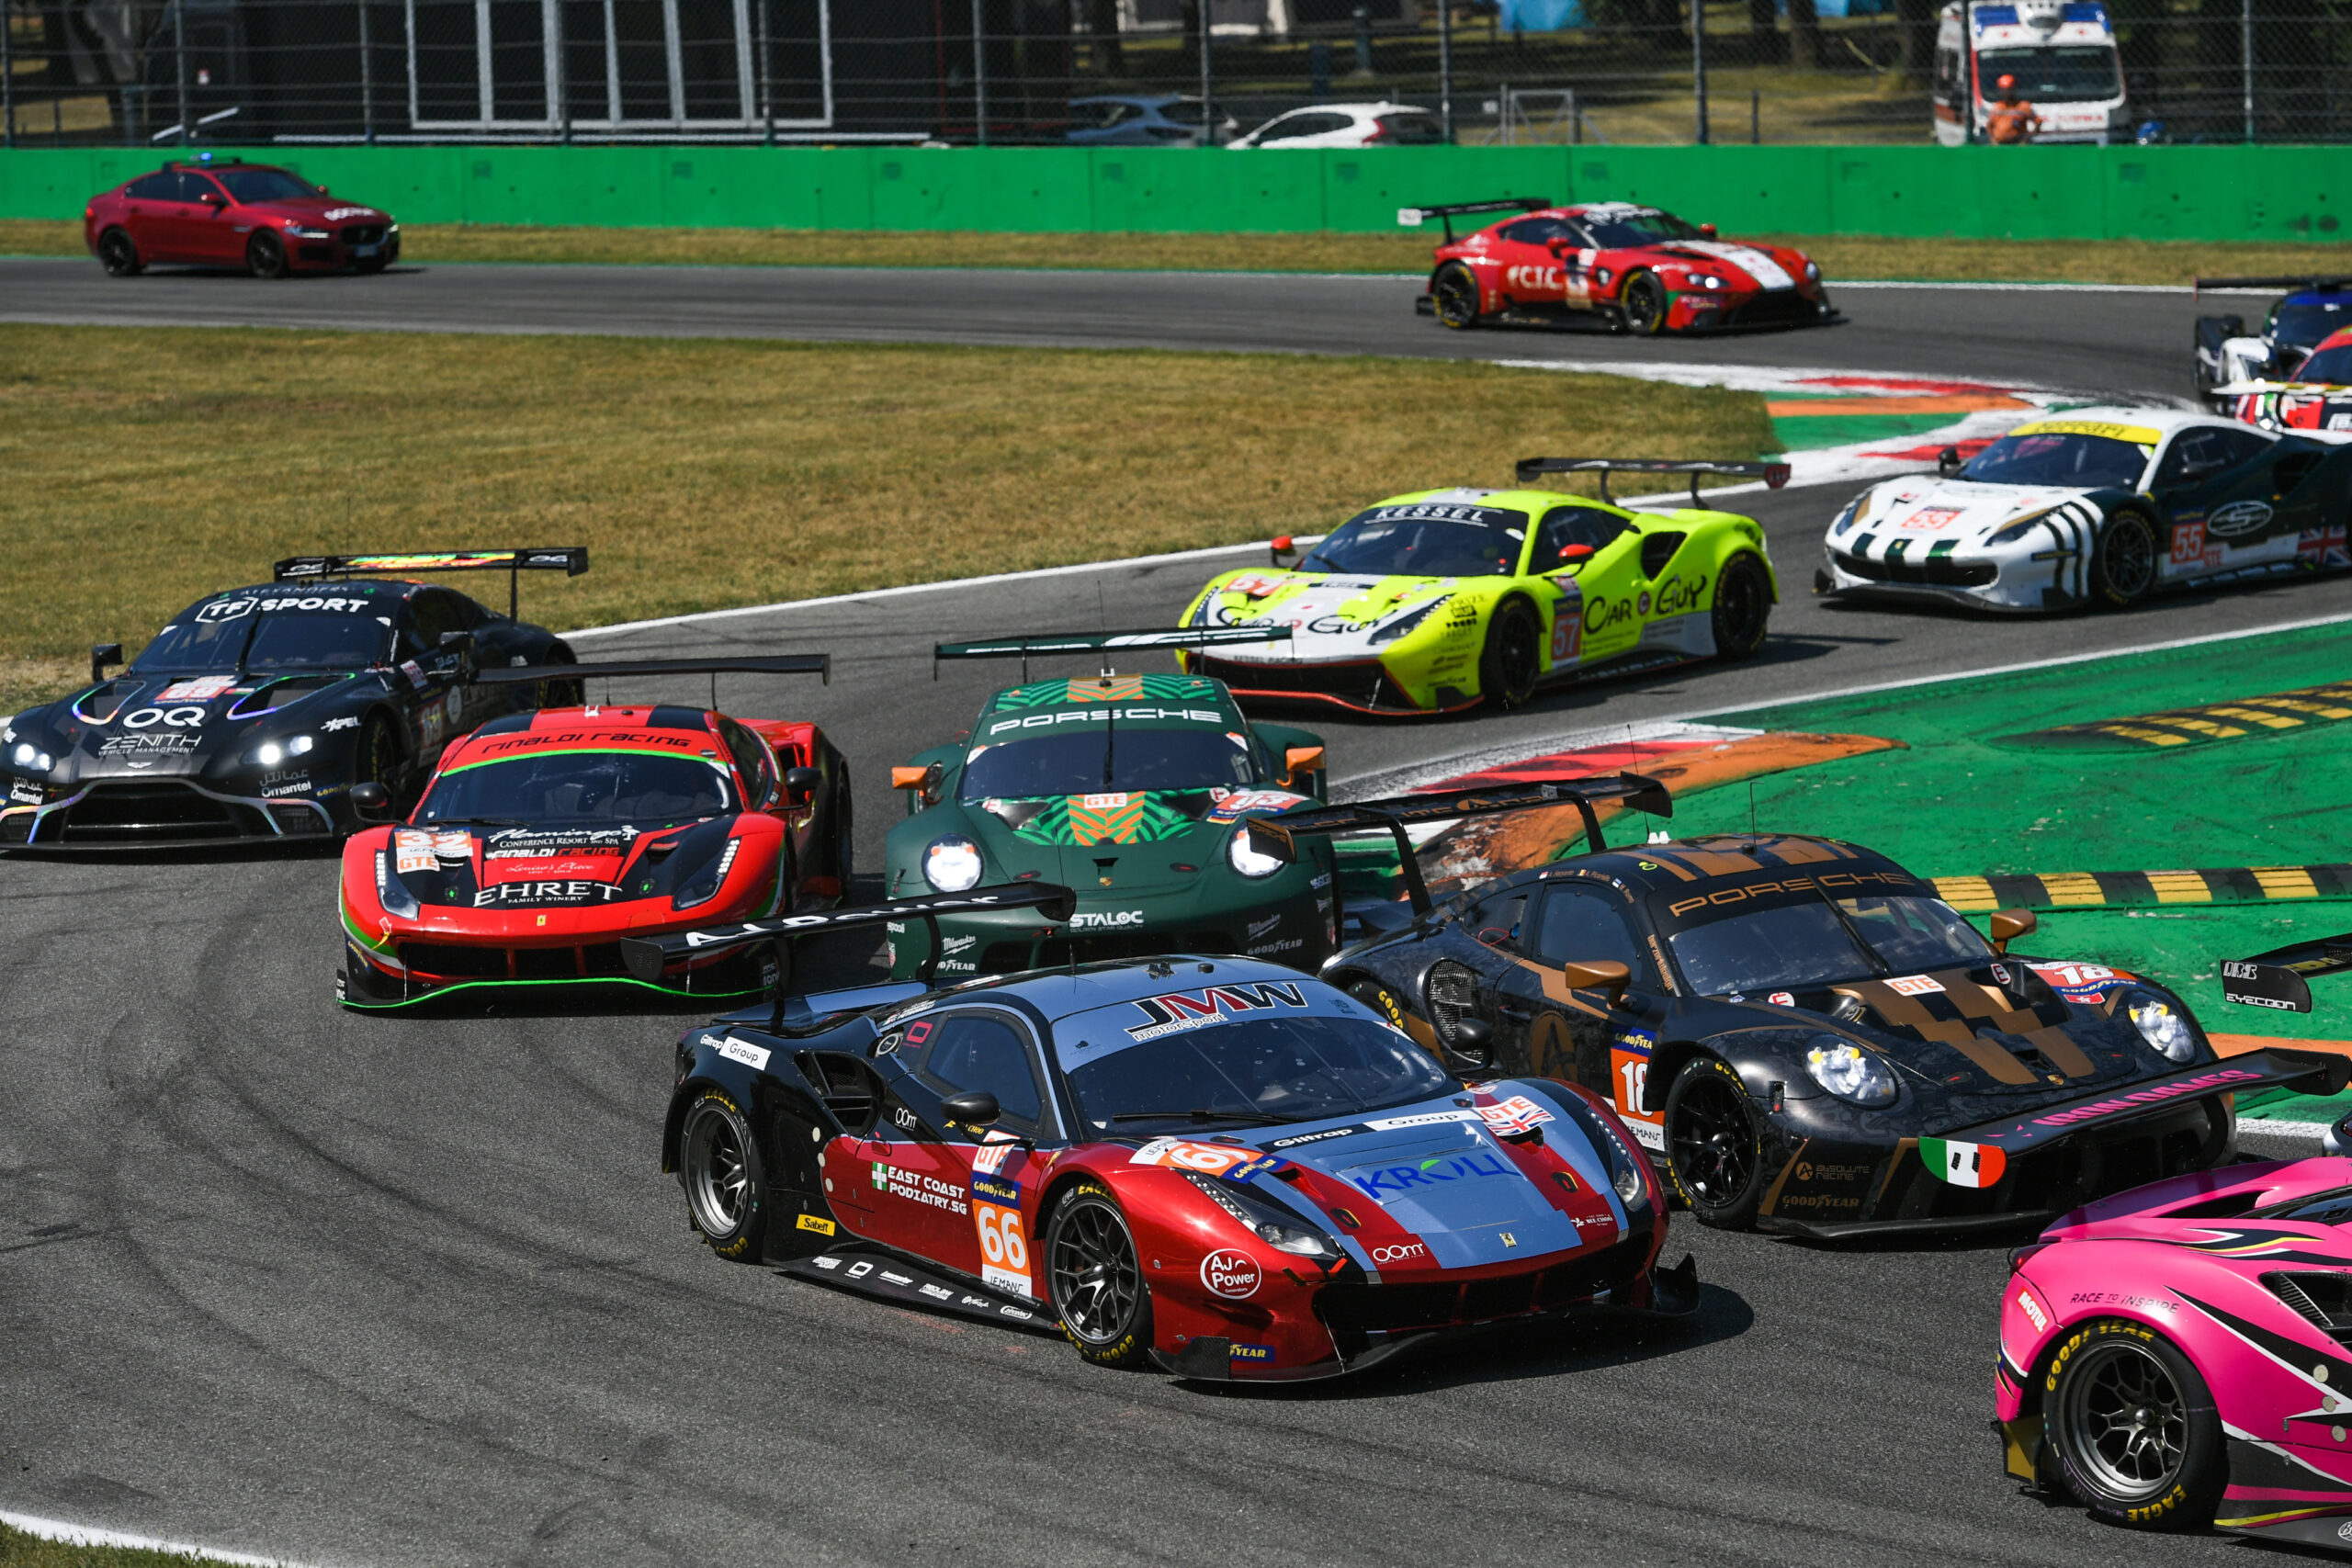 Monza Round 3 – Post Race Report